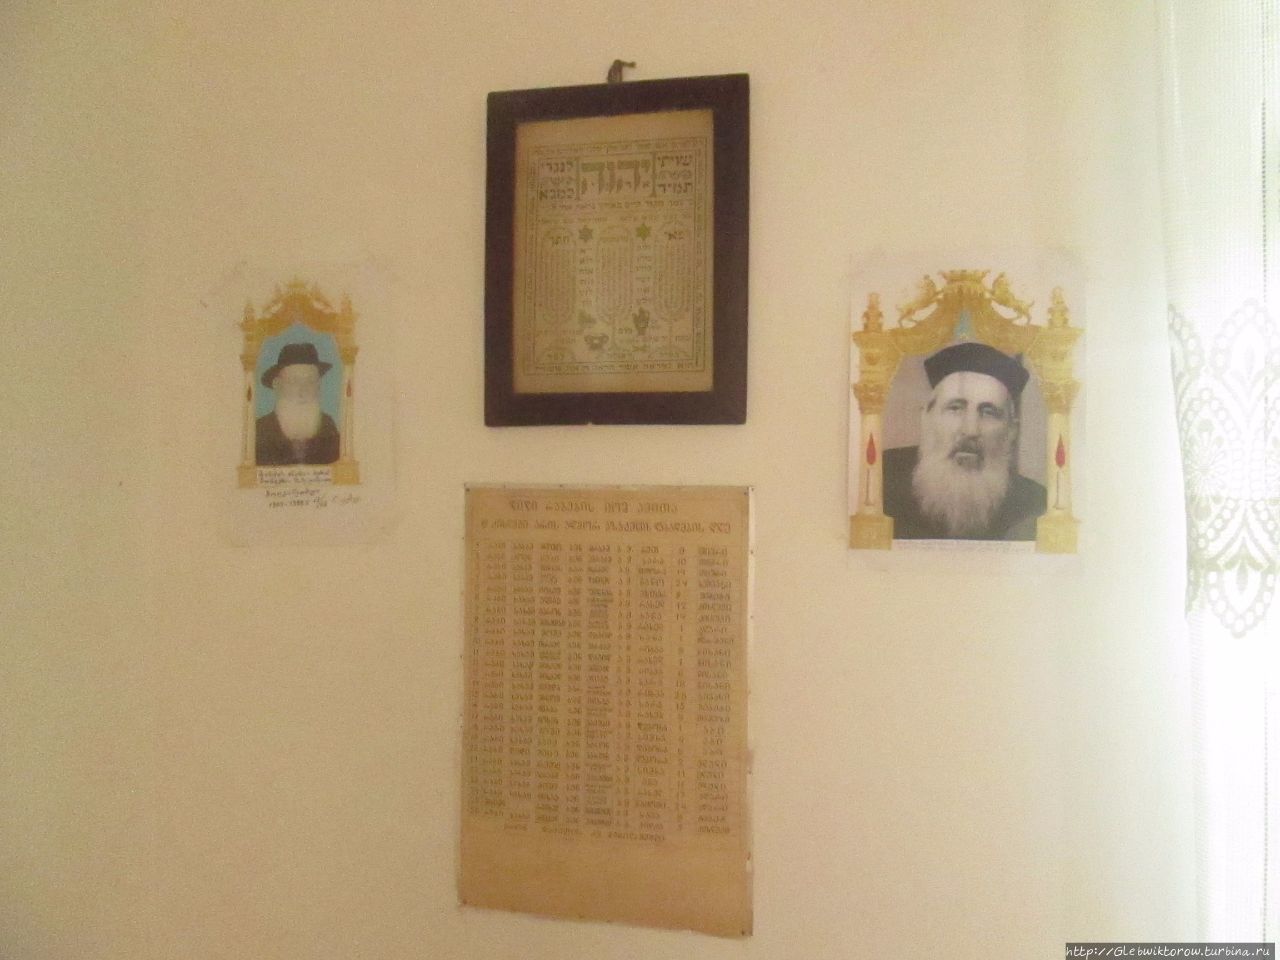 Еврейский музей Кулаши, Грузия